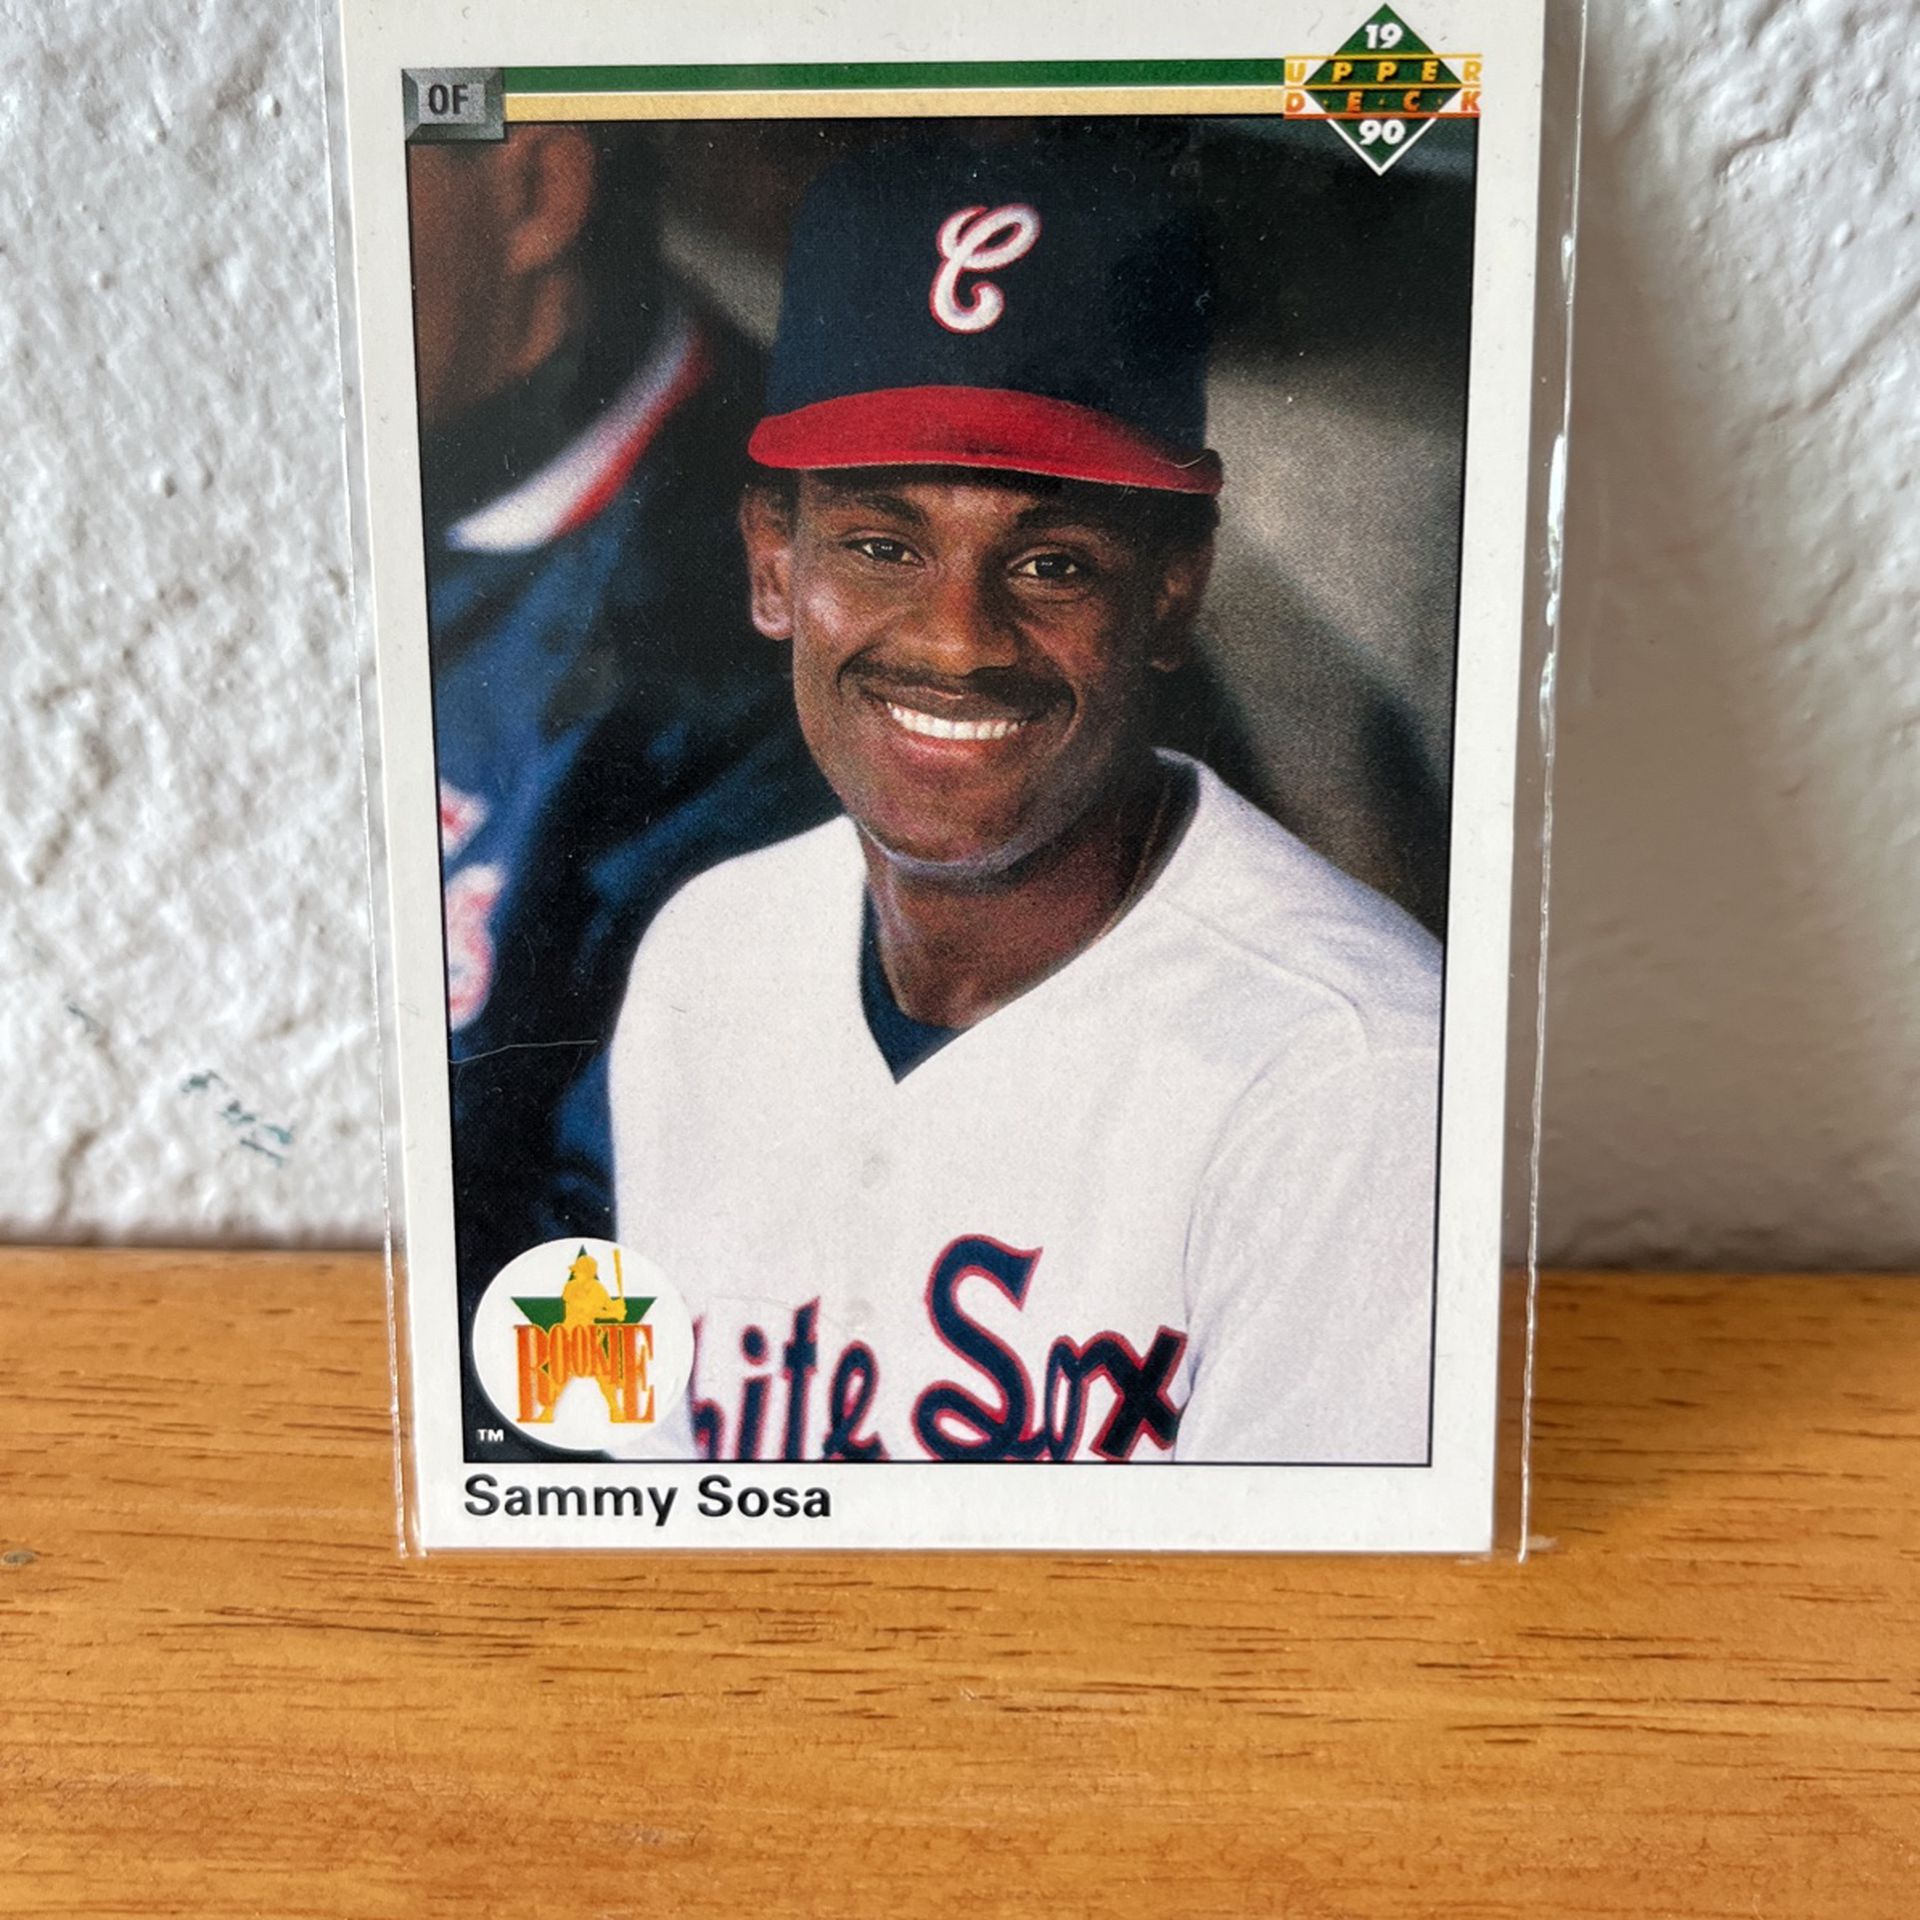 Sammy Sosa Rookie Baseball Card for Sale in Corona, CA - OfferUp